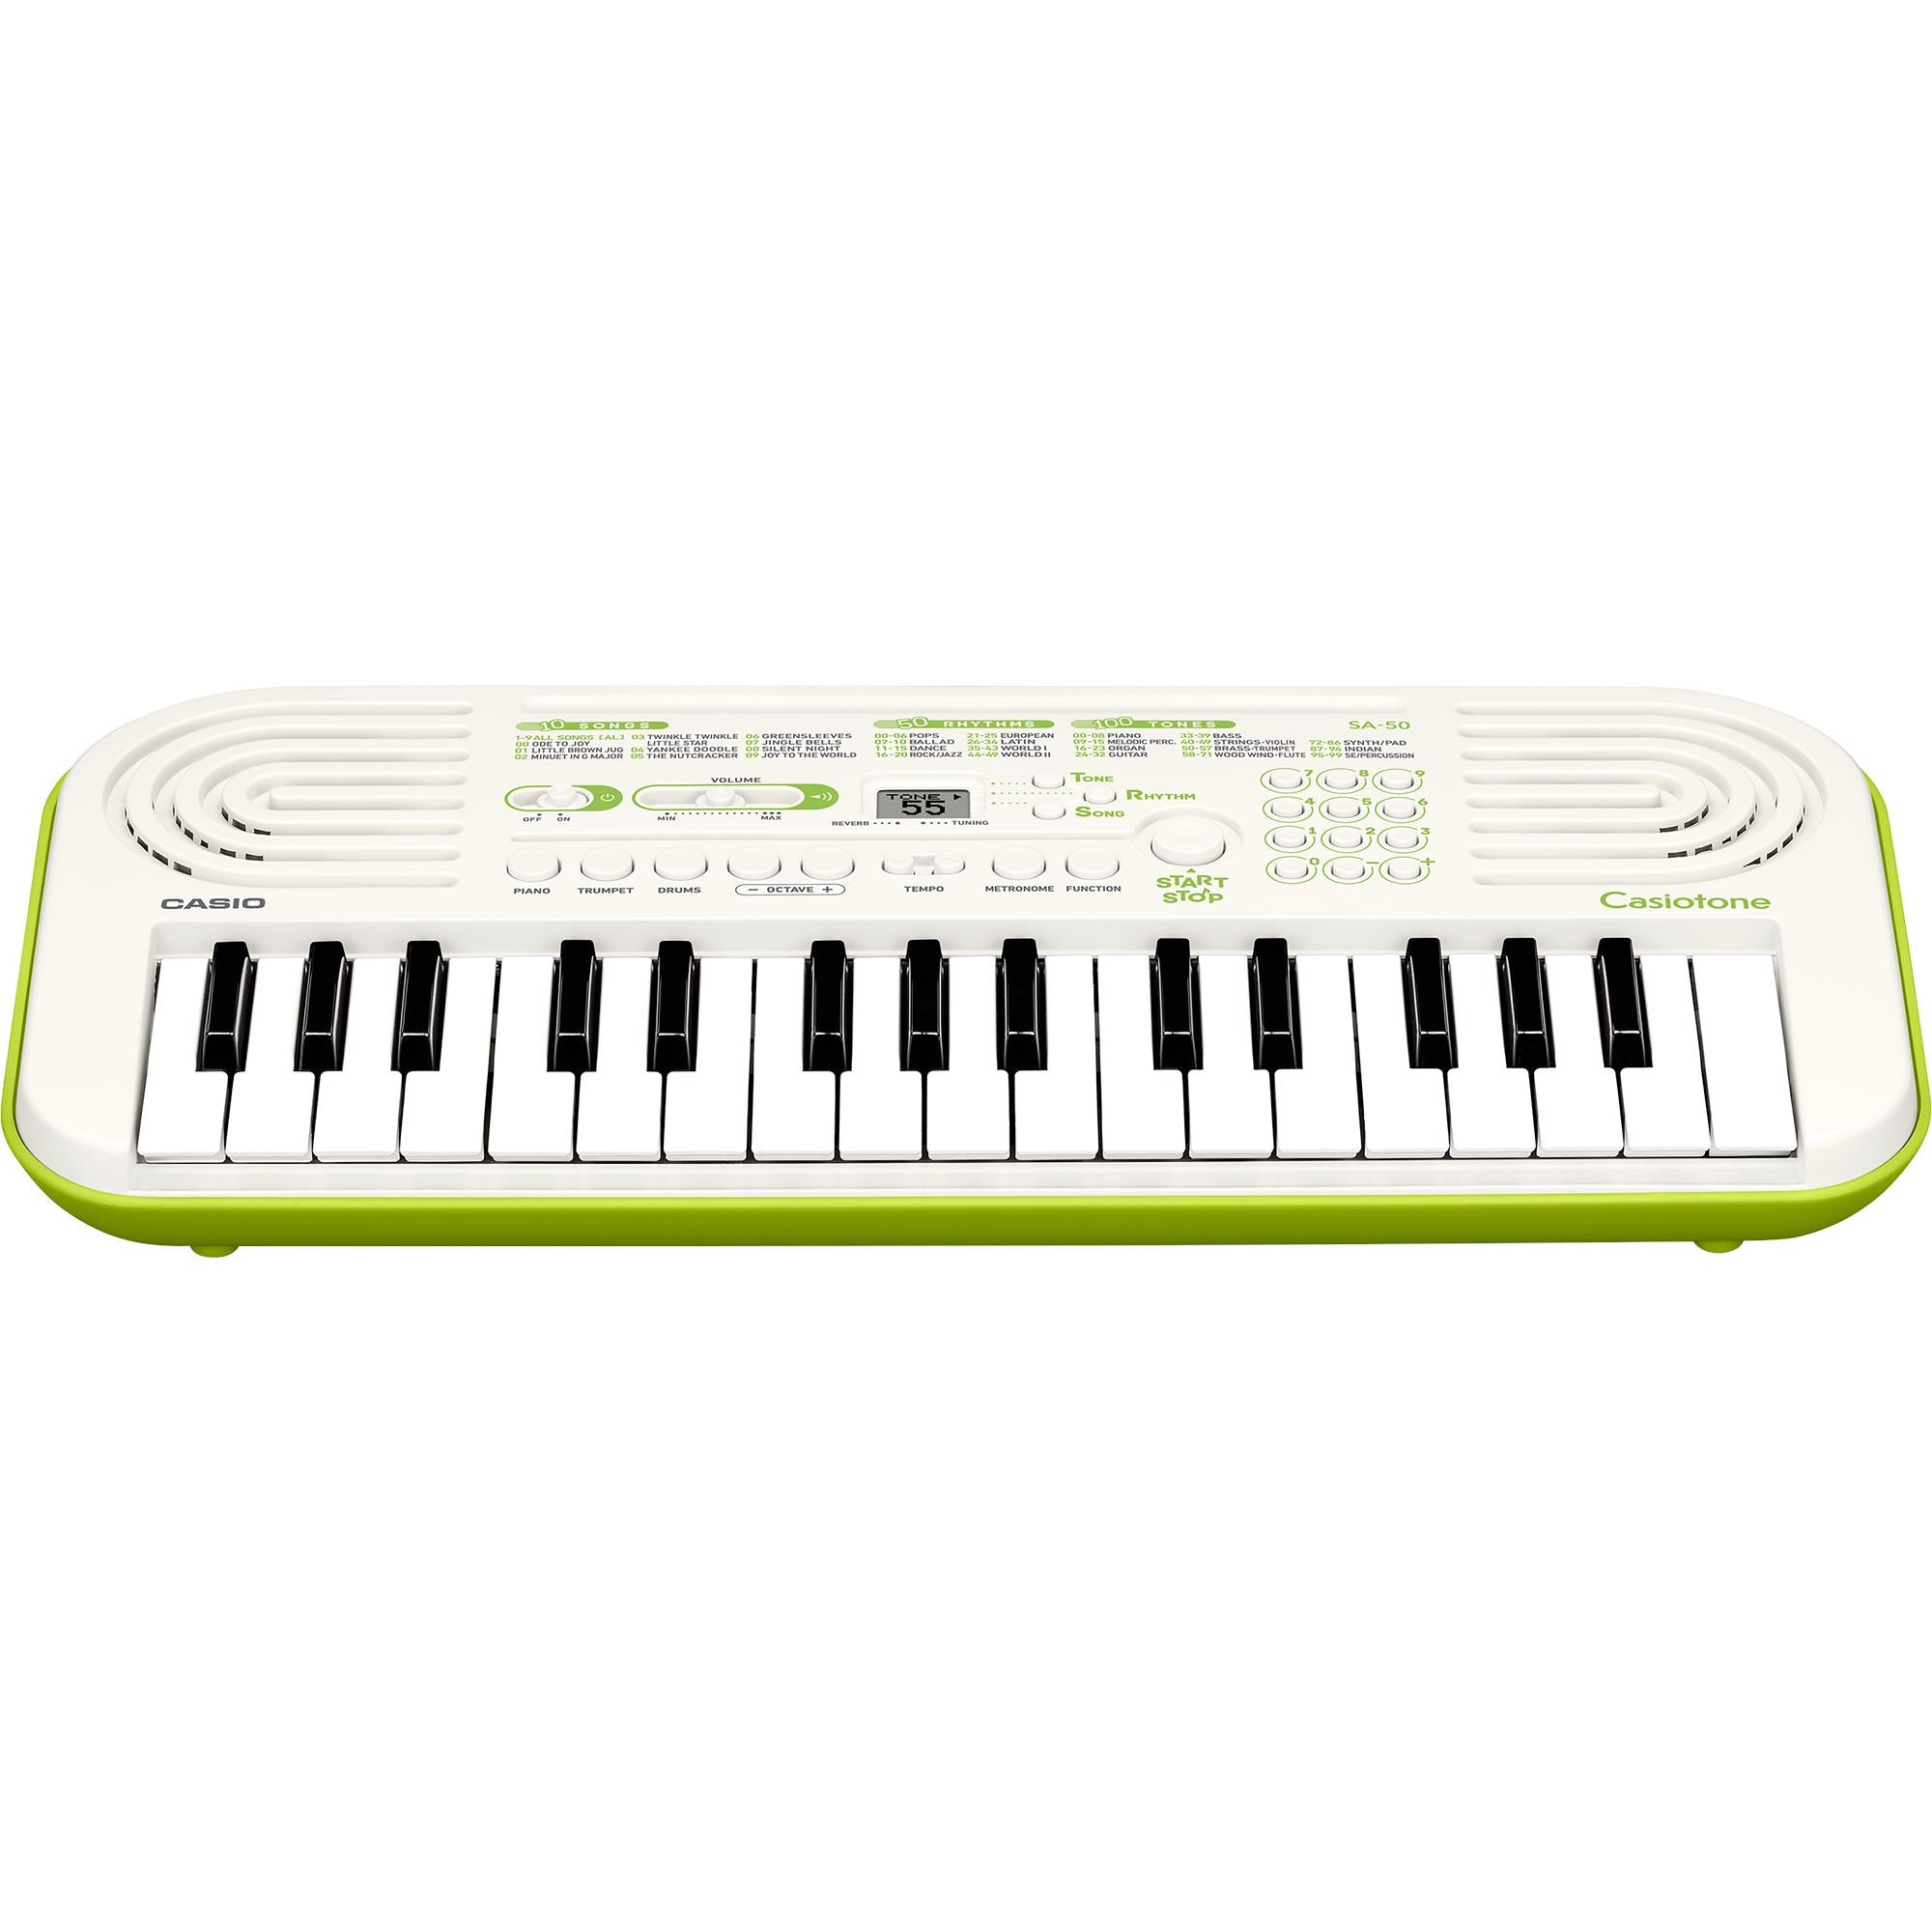 Portable Keyboard, Small & Large Portable Personal Piano